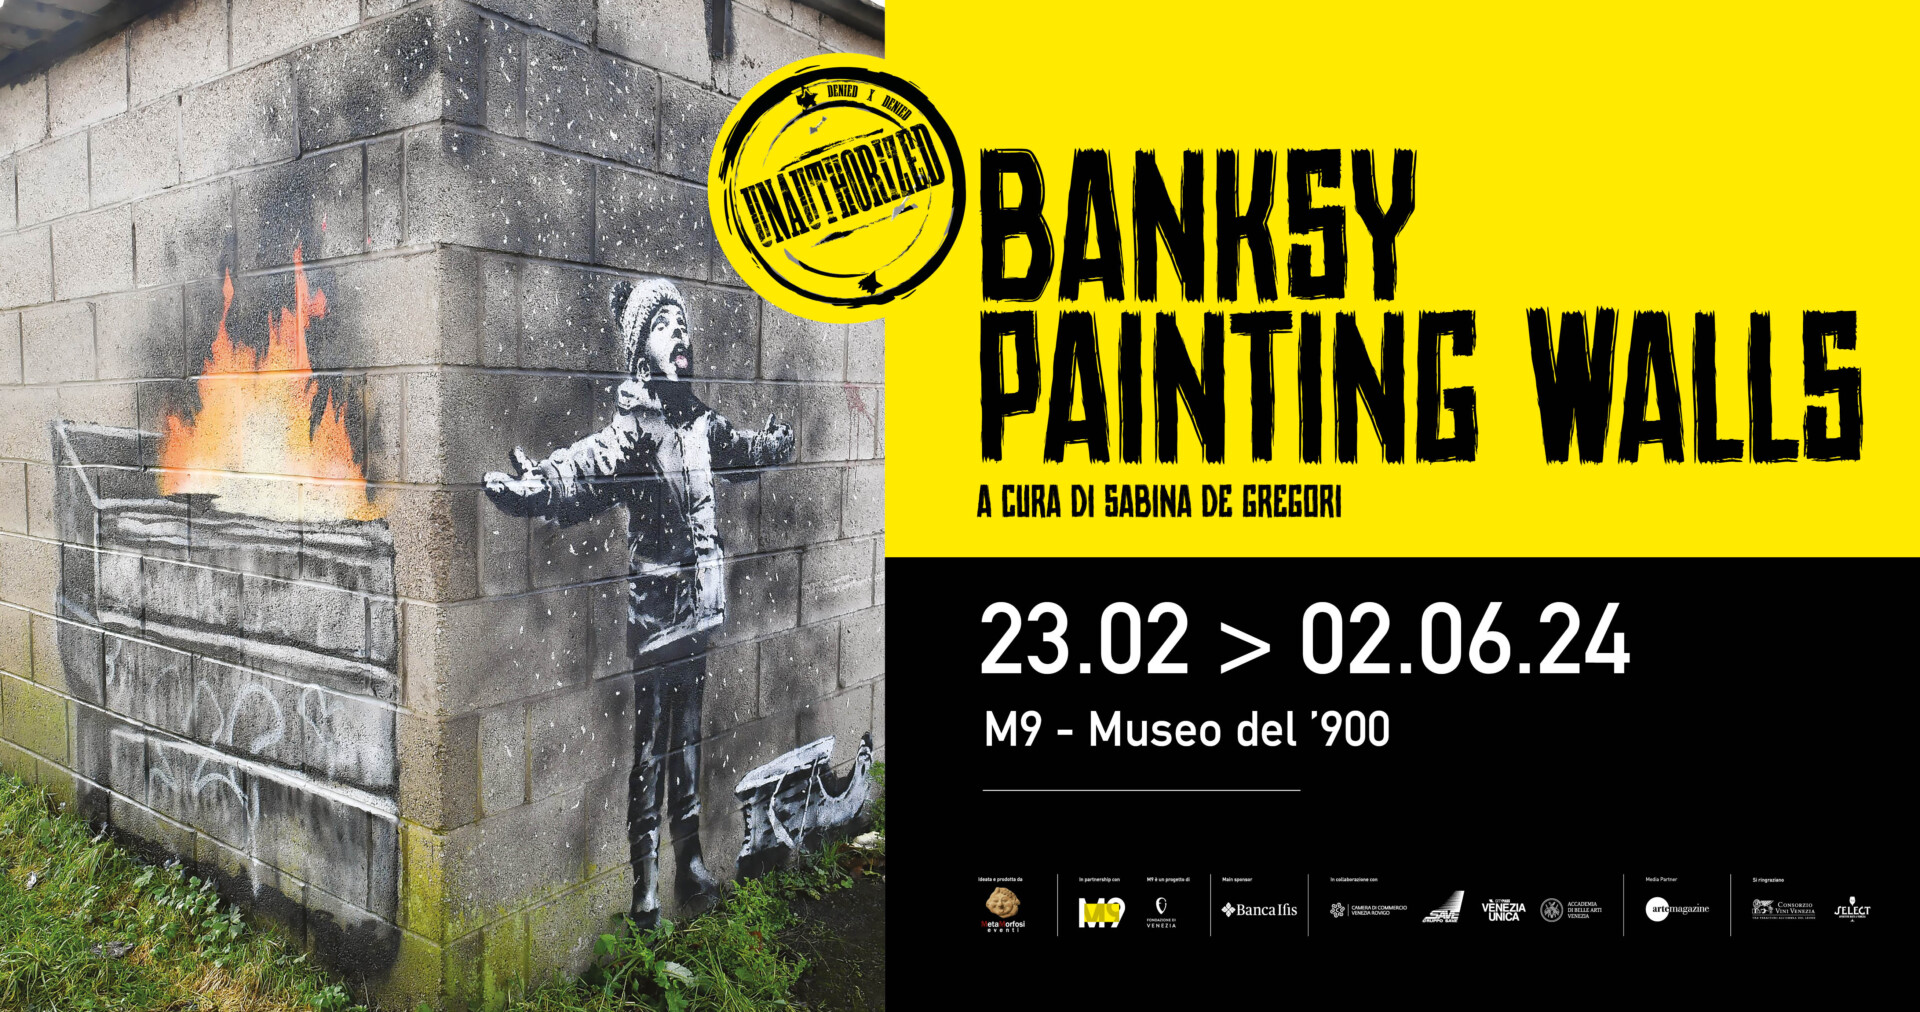 <br><br>Banksy Painting Walls